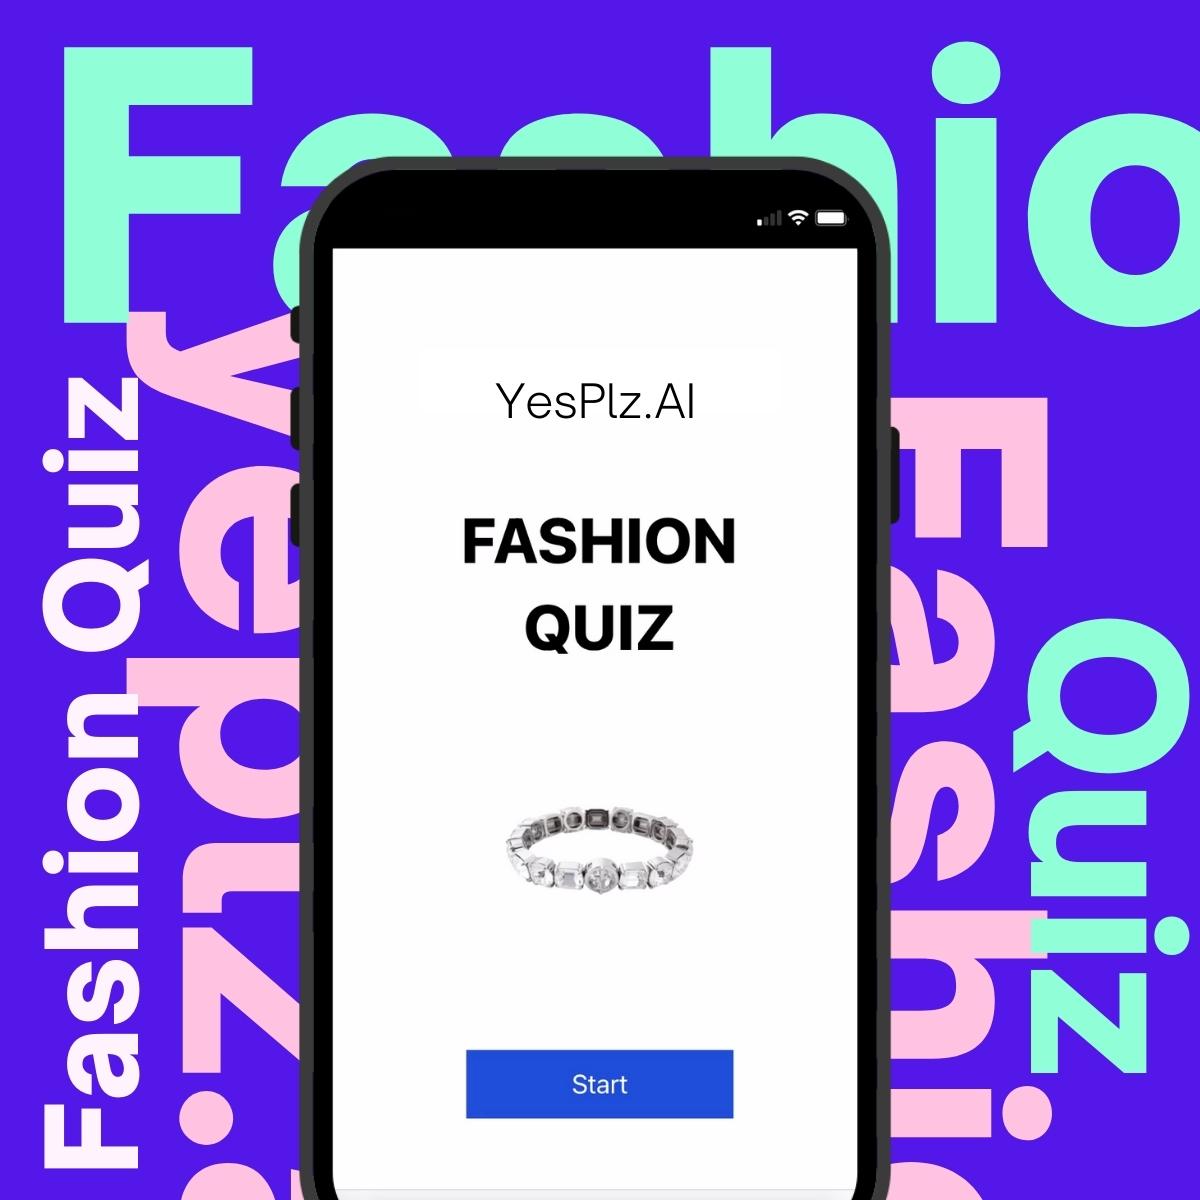 A phone that says "fashion quiz" by YesPlz AI 